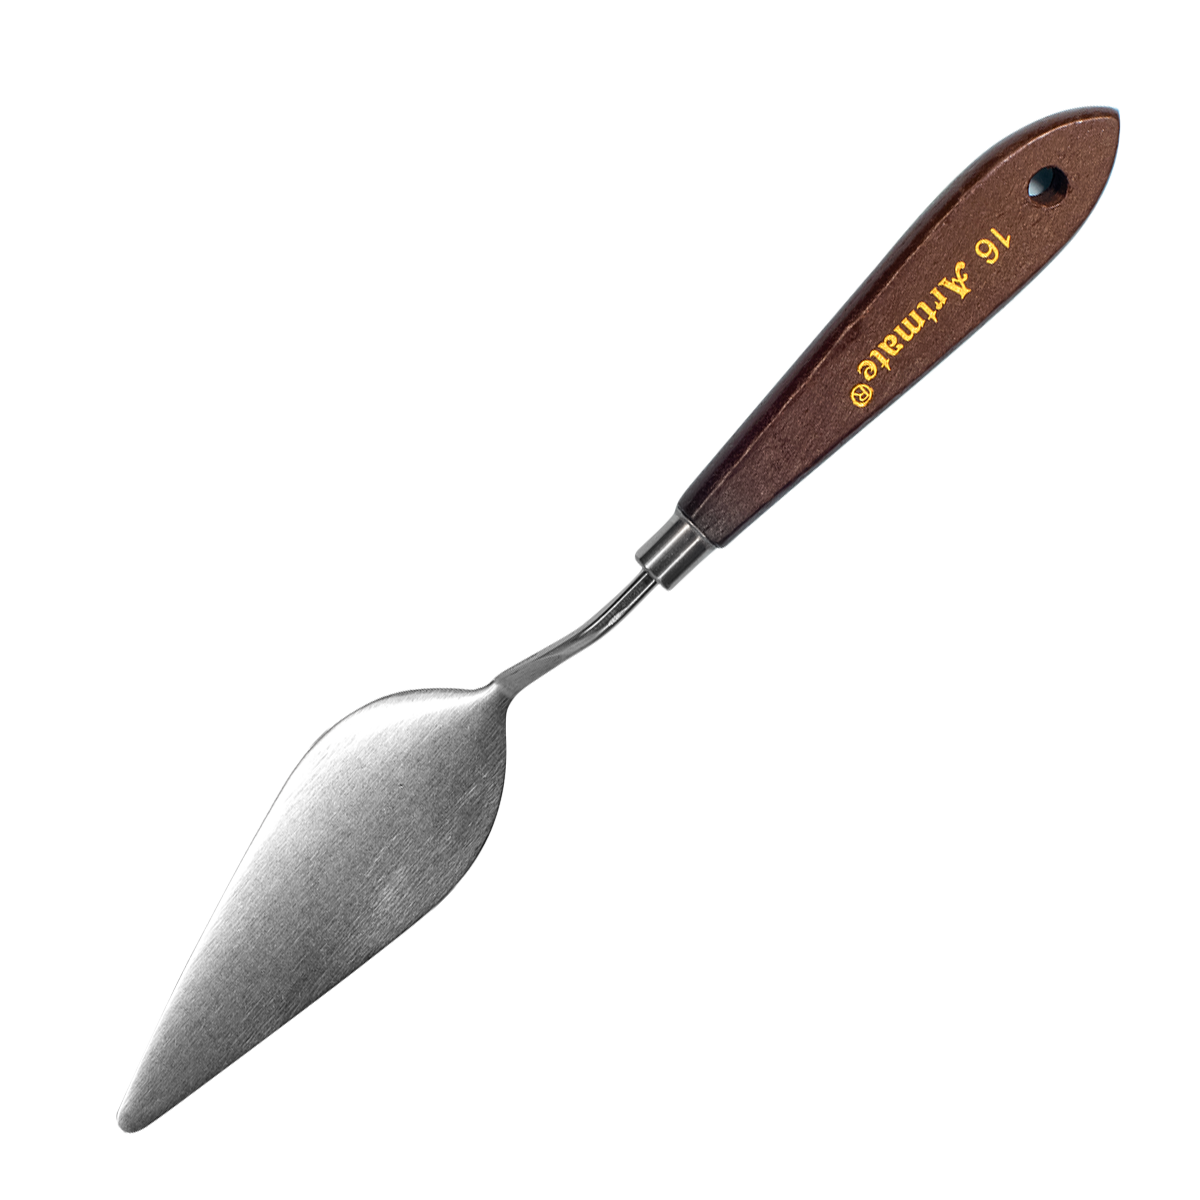 ARTMATE Palette Knife No. 16